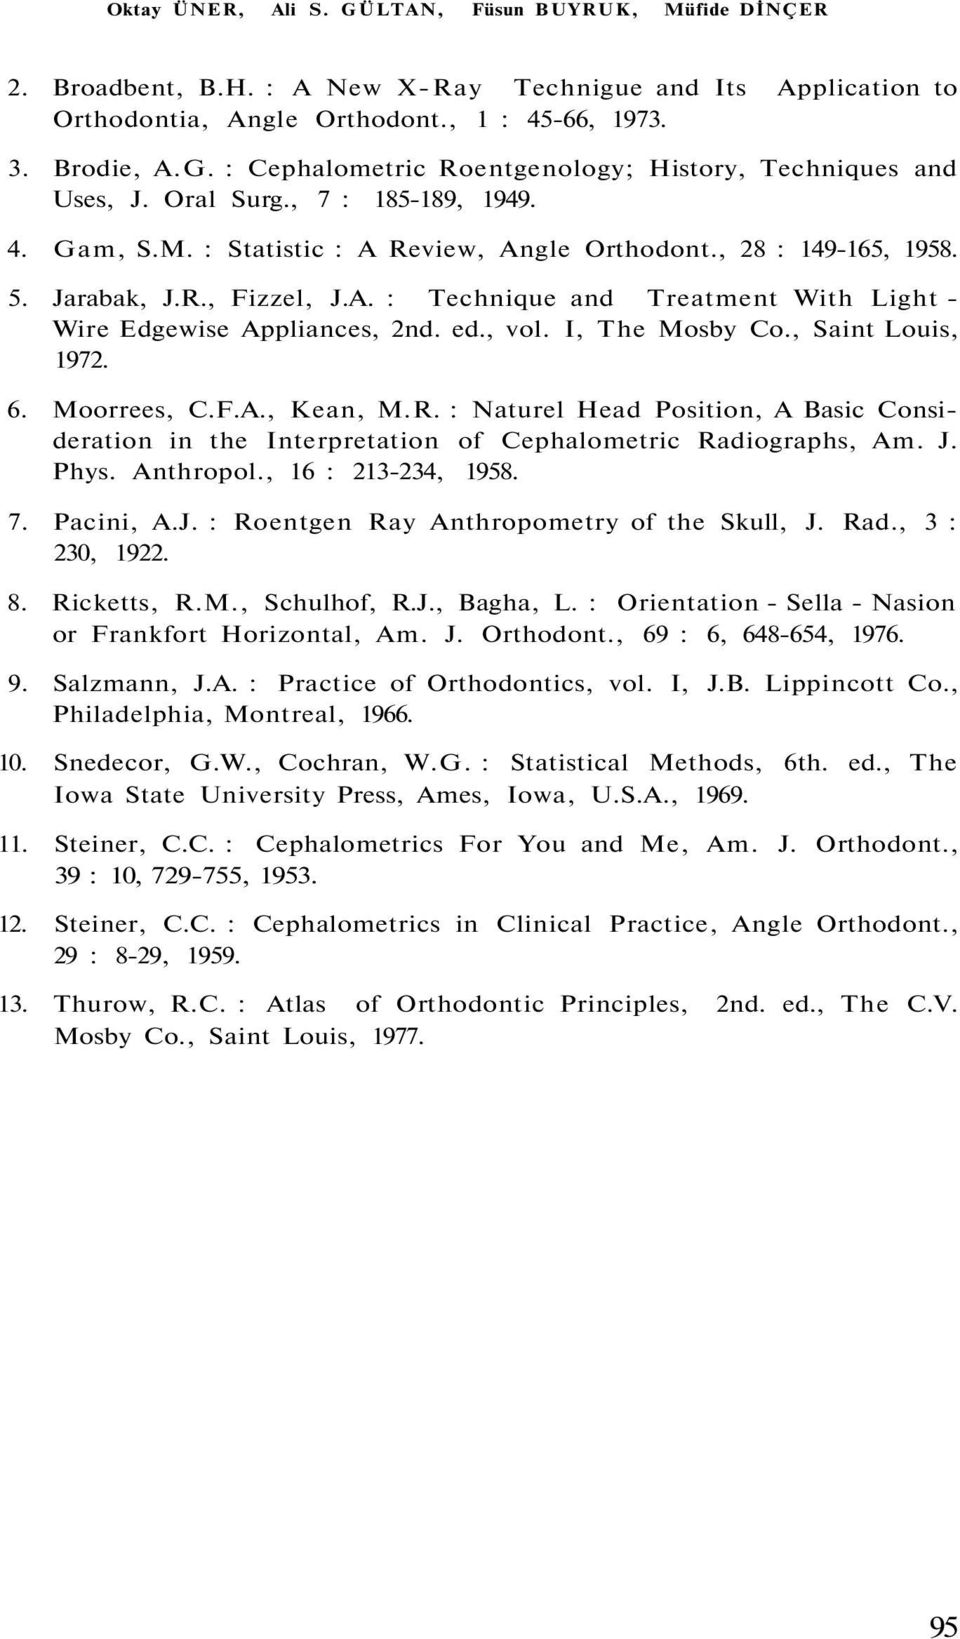 ed., vol. I, The Mosby Co., Saint Louis, 1972. 6. Moorrees, C.F.A., Kean, M.R. : Naturel Head Position, A Basic Consideration in the Interpretation of Cephalometric Radiographs, Am. J. Phys.